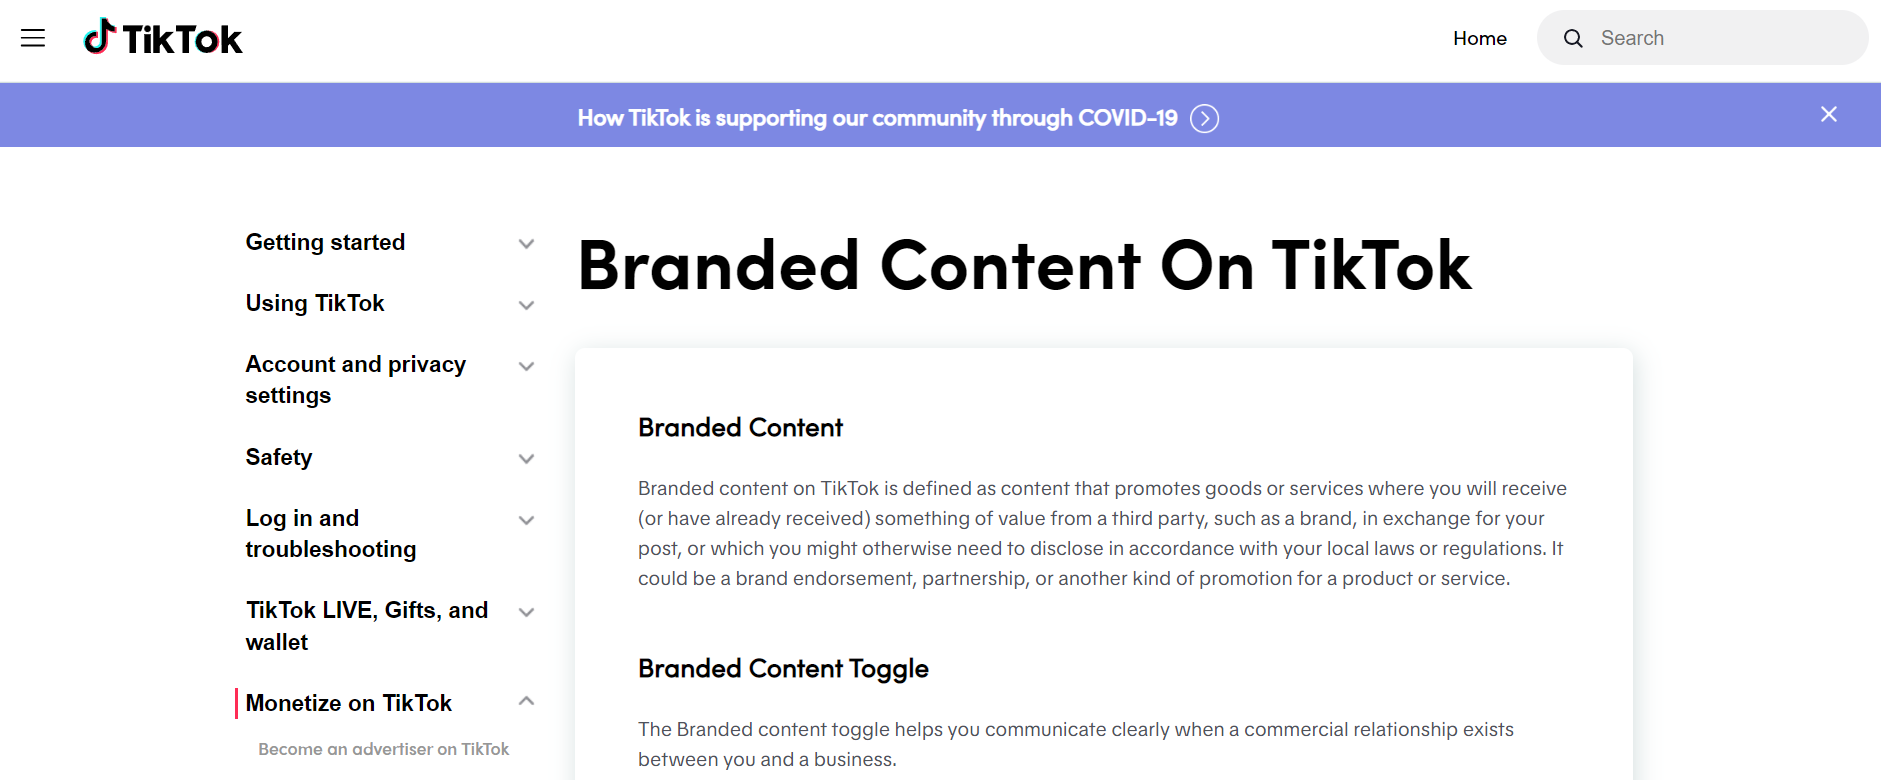 TikTok Branded Content Toggle